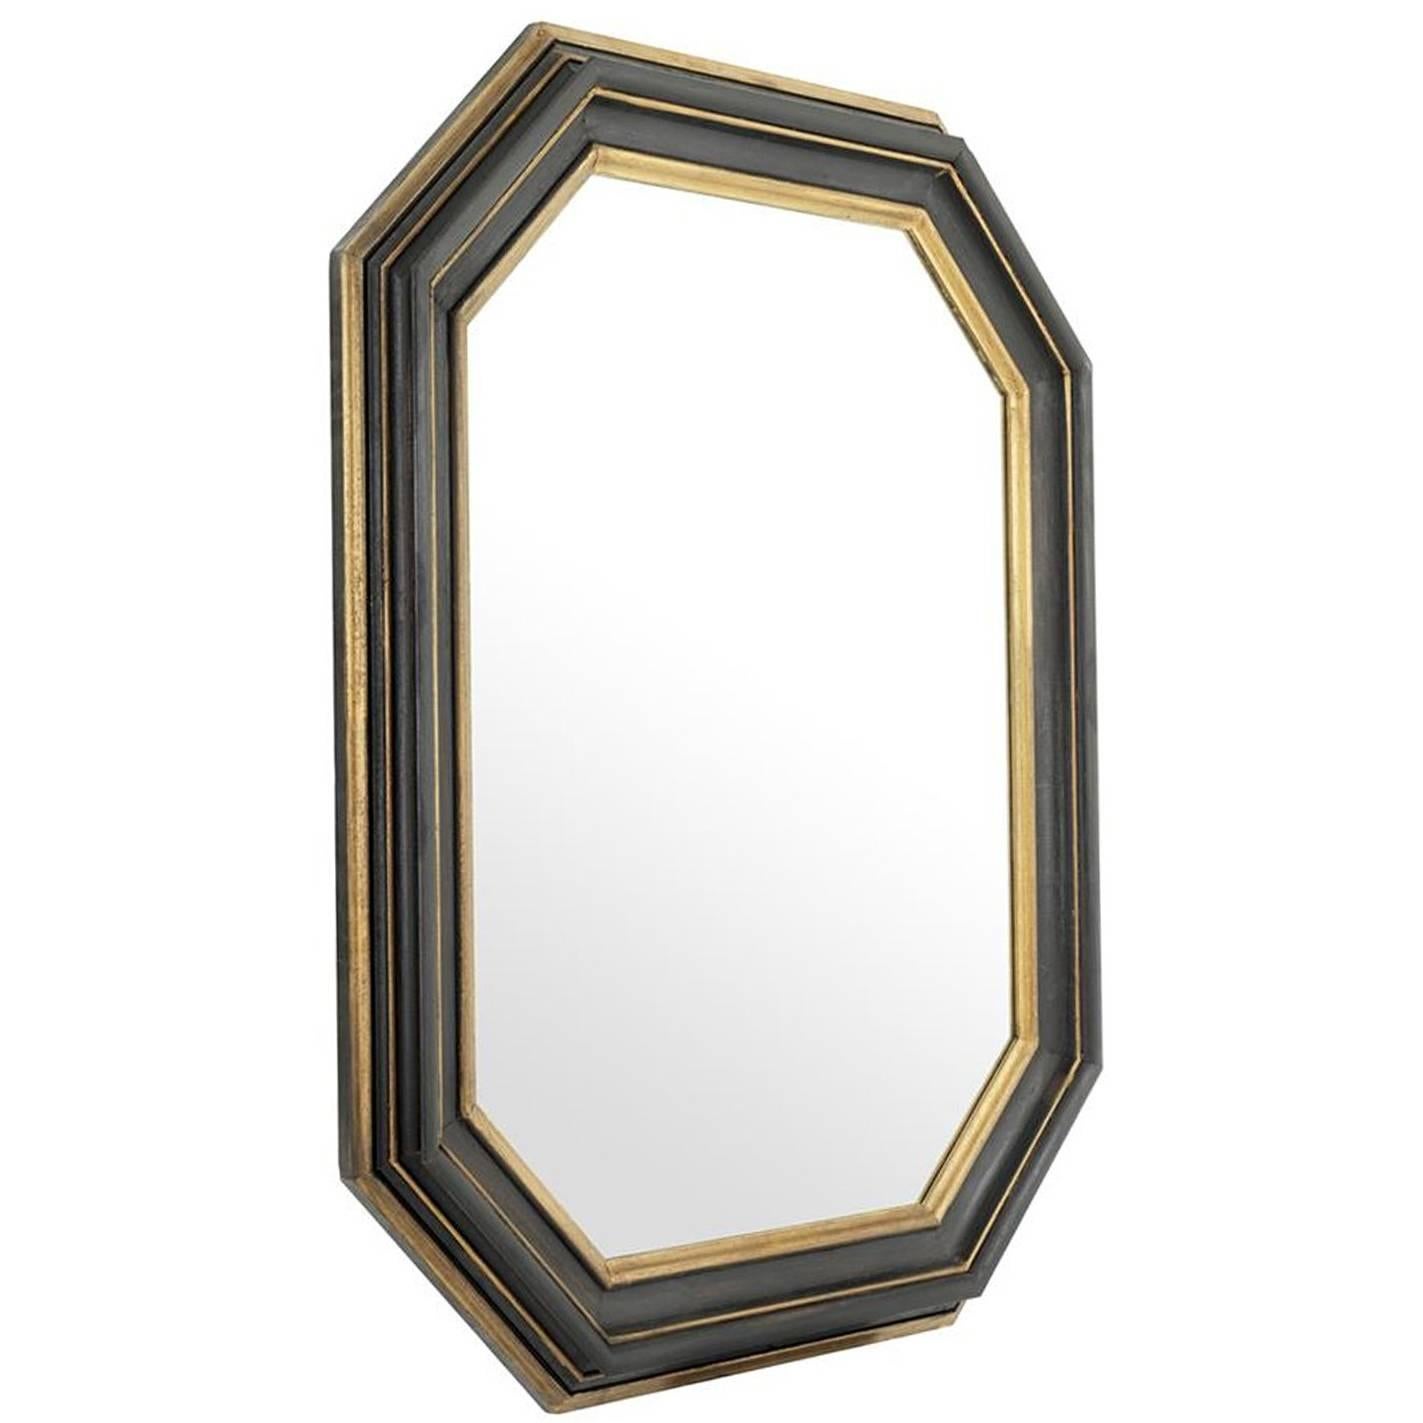 Black Vintage Mirror in Antique Gold Finish